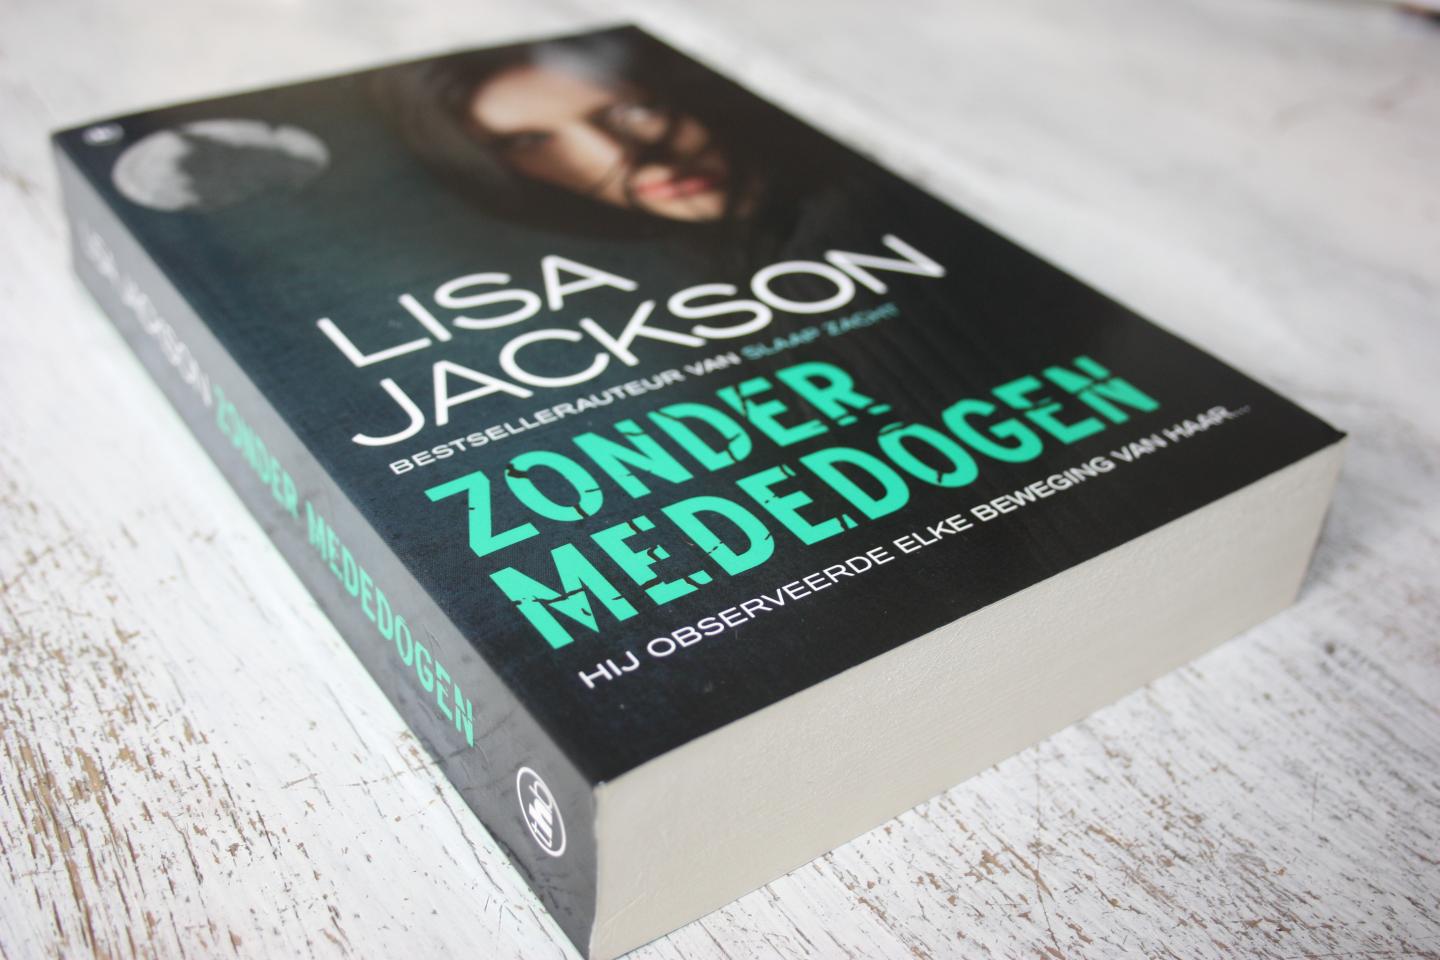 Jackson, Lisa - ZONDER MEDEDOGEN